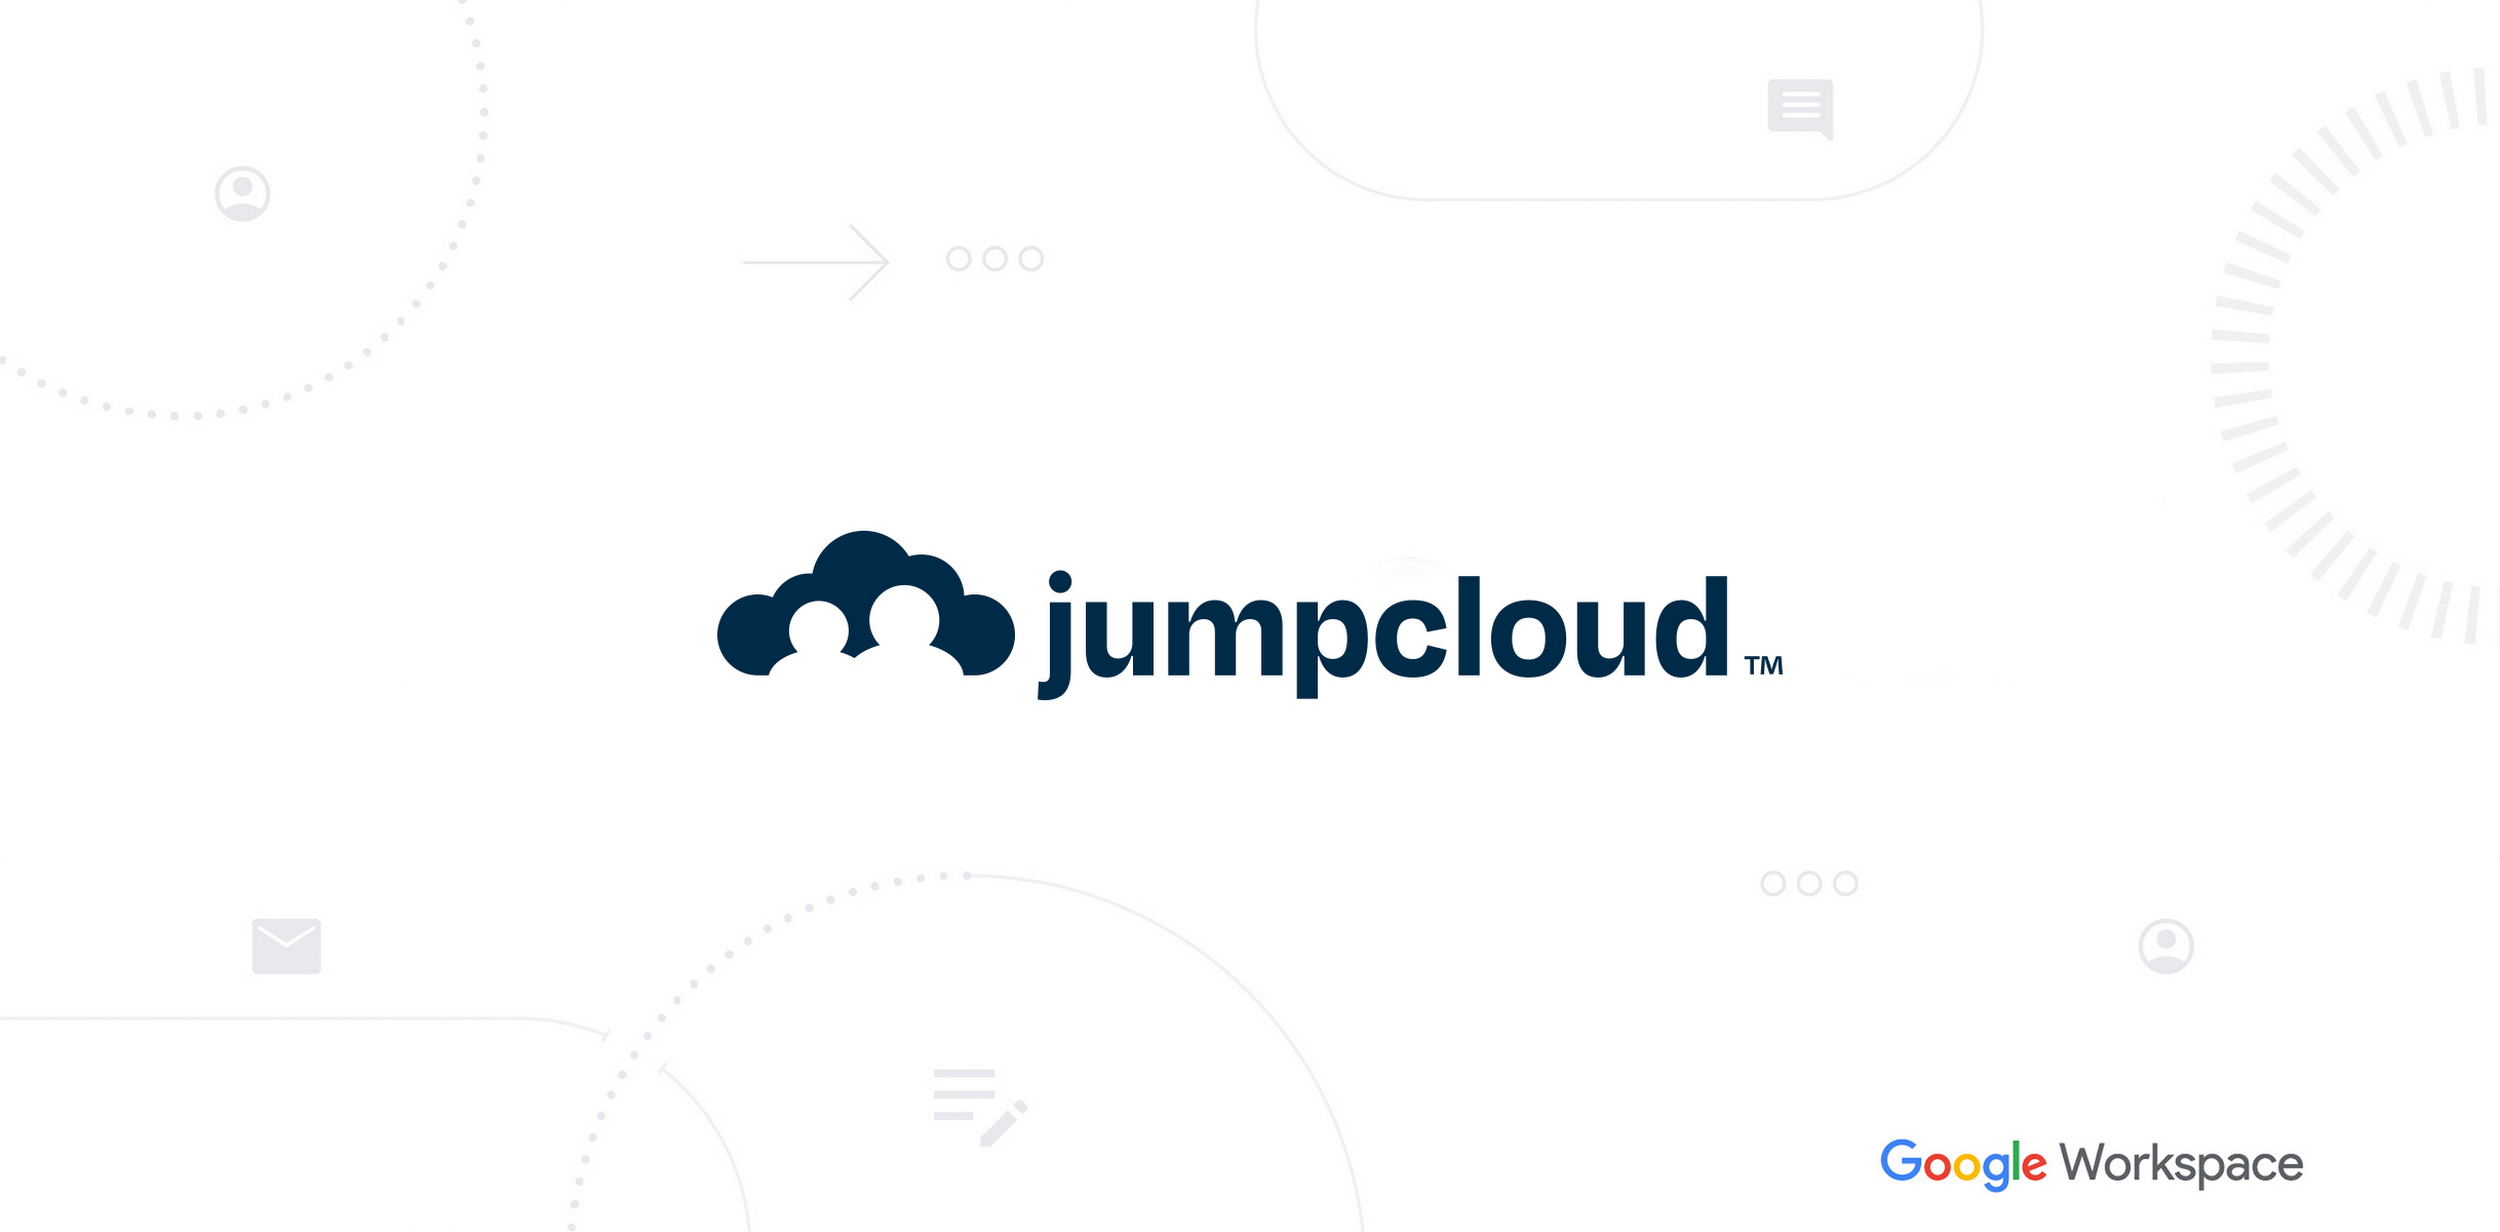 https://storage.googleapis.com/gweb-cloudblog-publish/images/re-do_JumpCloud_logo_on_canvas.max-2500x2500.jpg